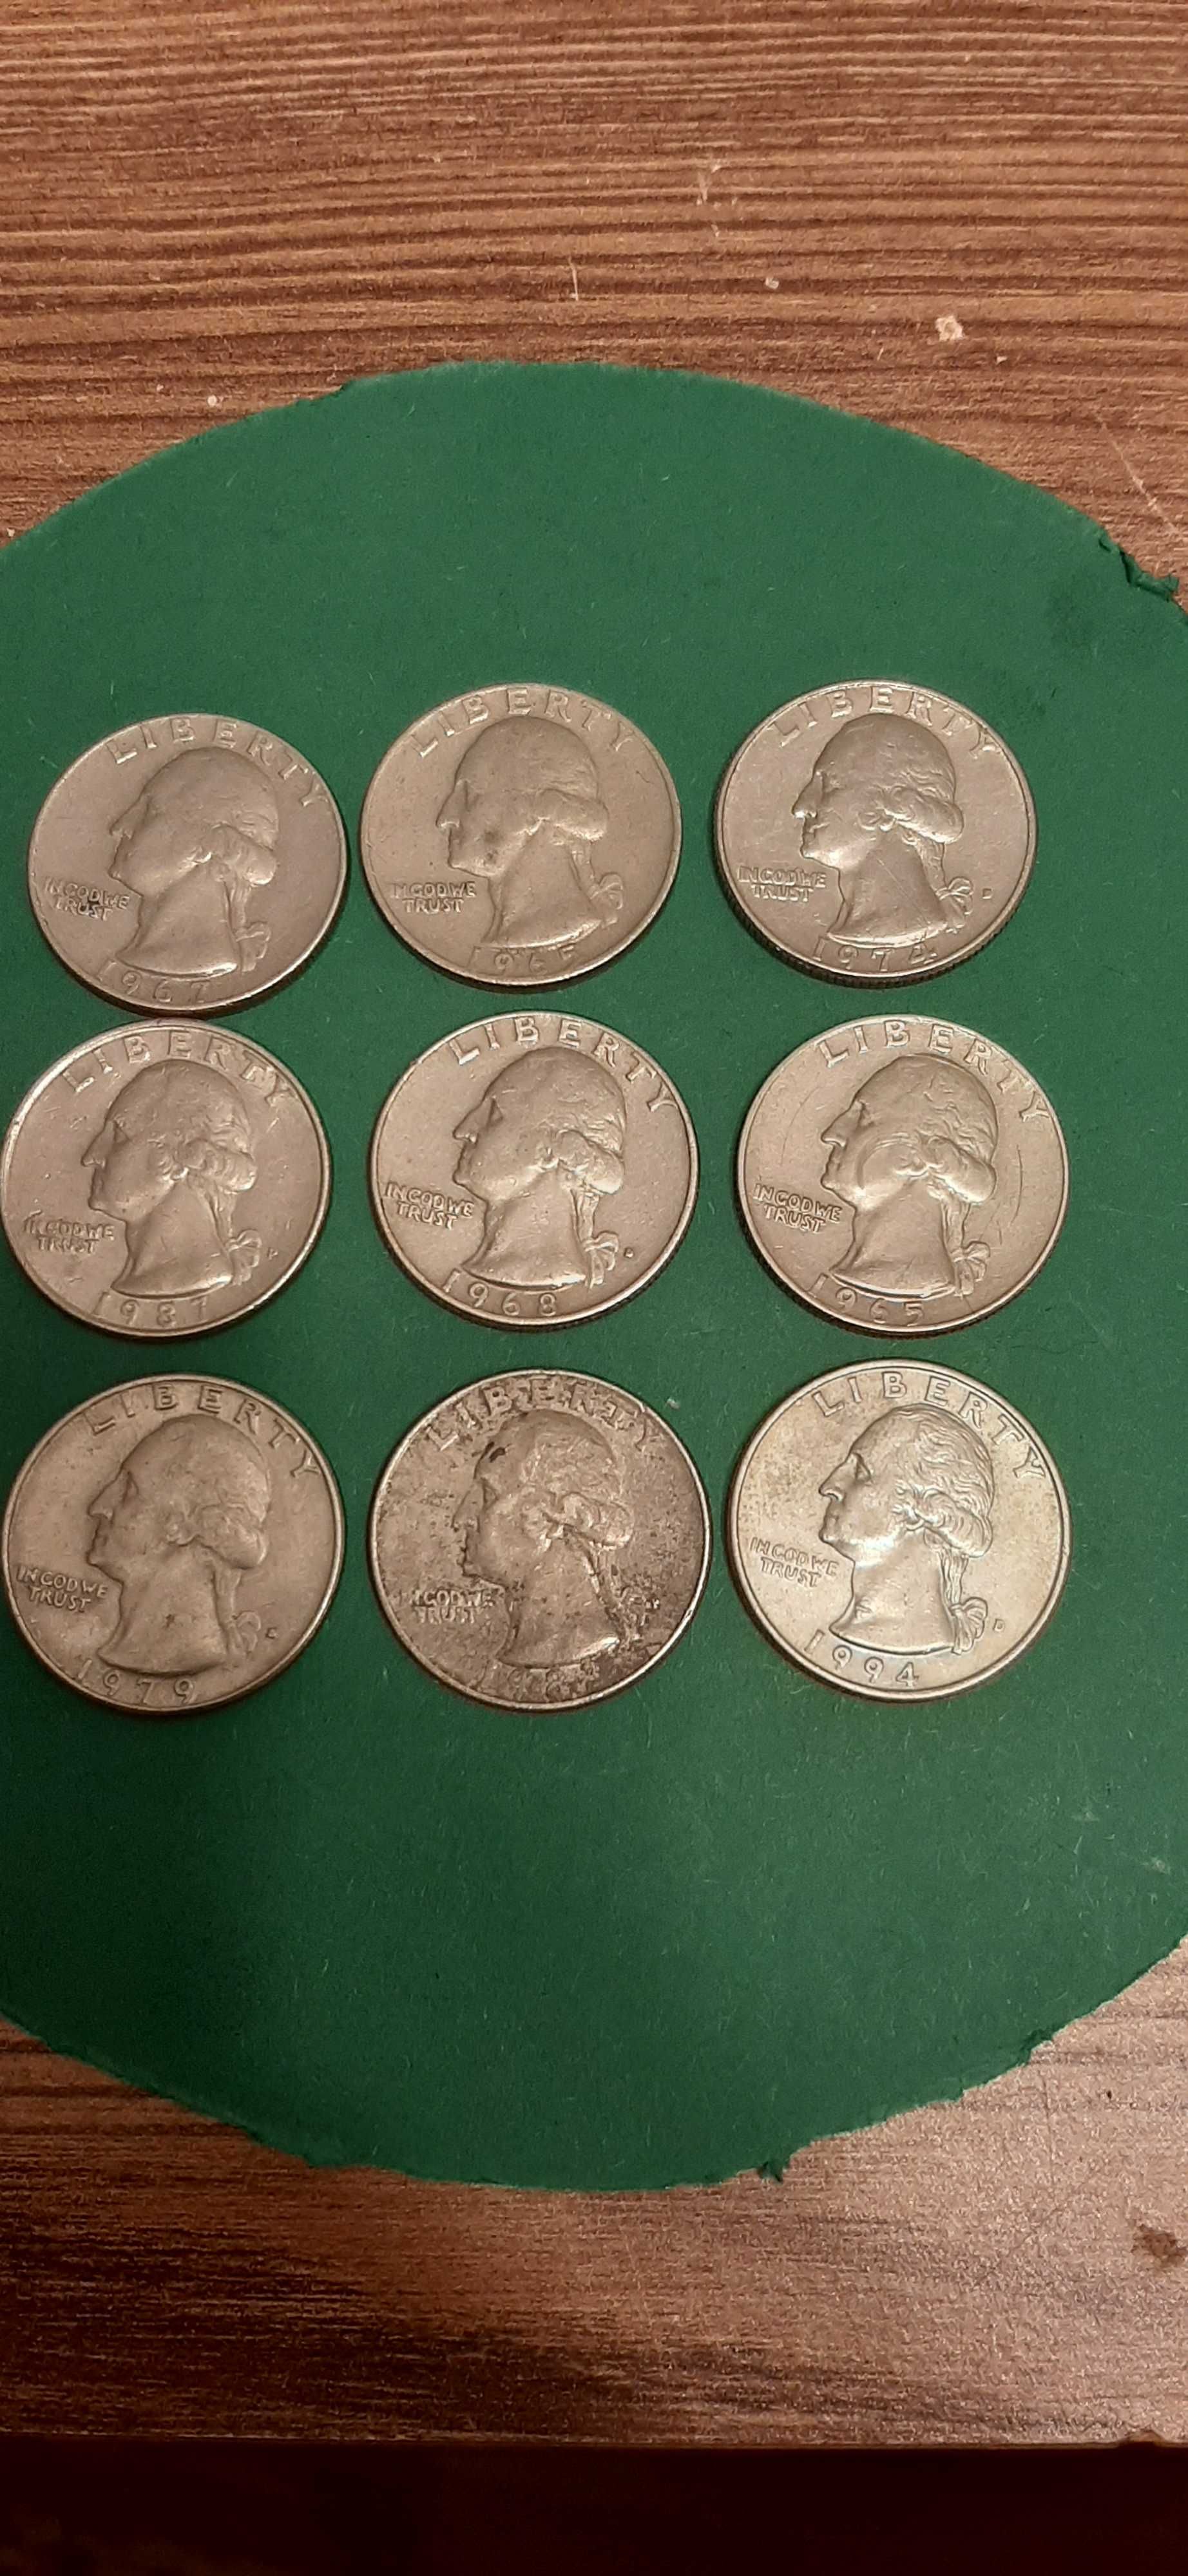 Stare monety amerykańskie